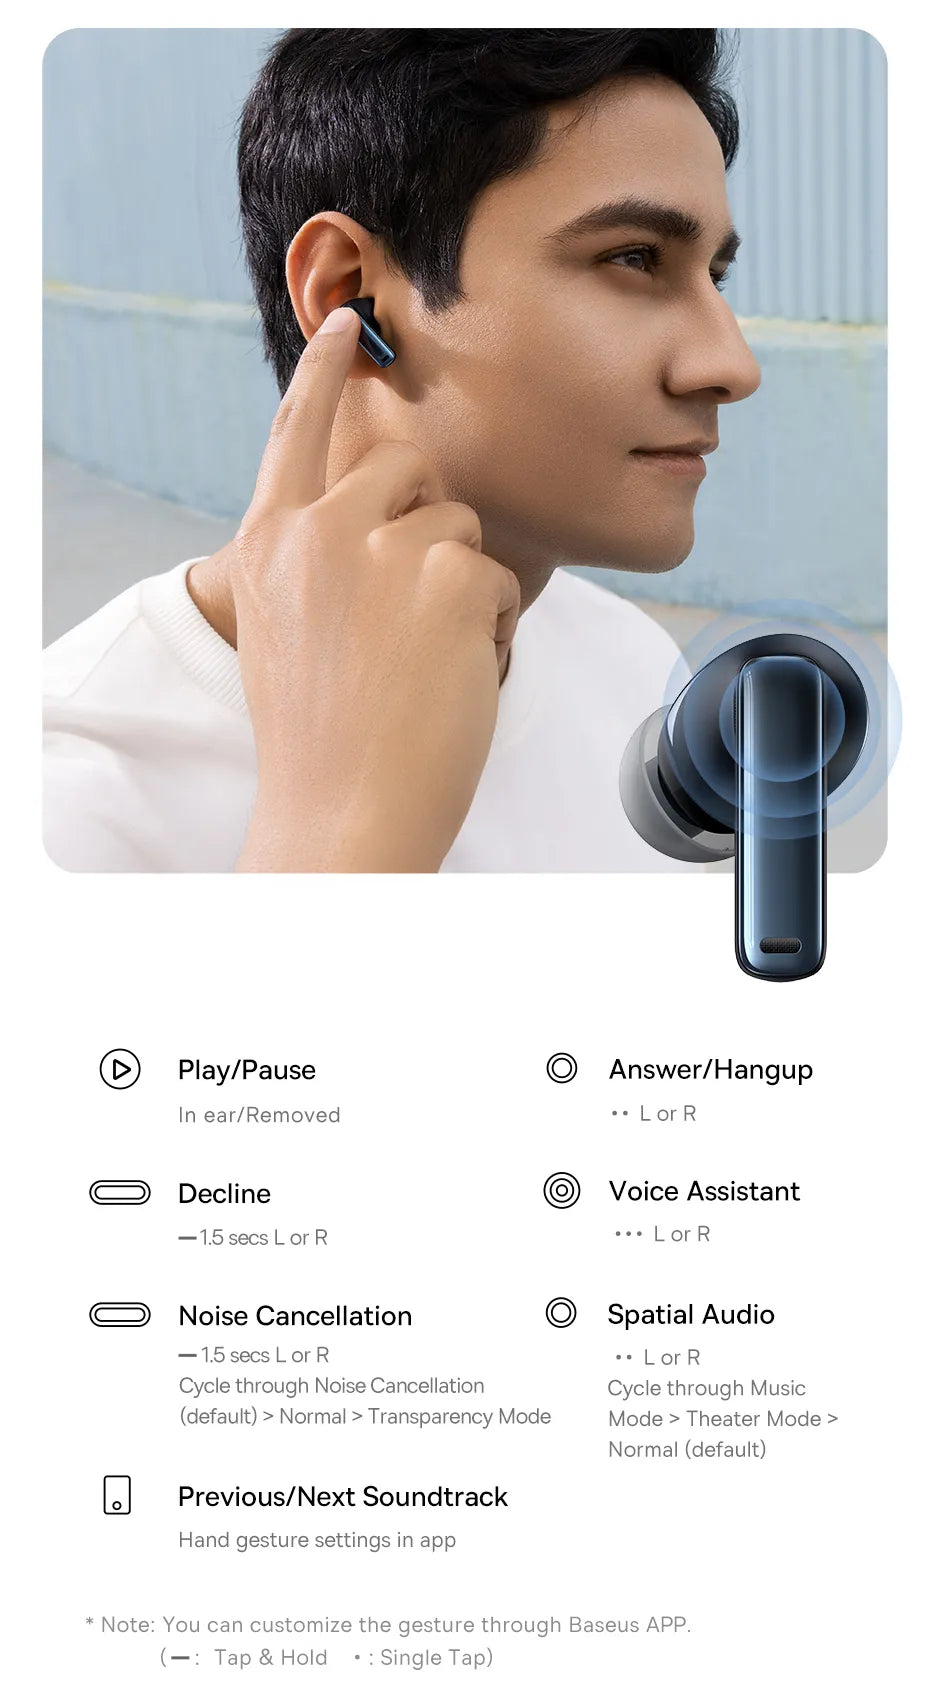 Baseus Bowie M2s ANC Earphone Bluetooth 5.3 Hybrid-48dB Noise Cancellation Wireless Headphone | Shop Now